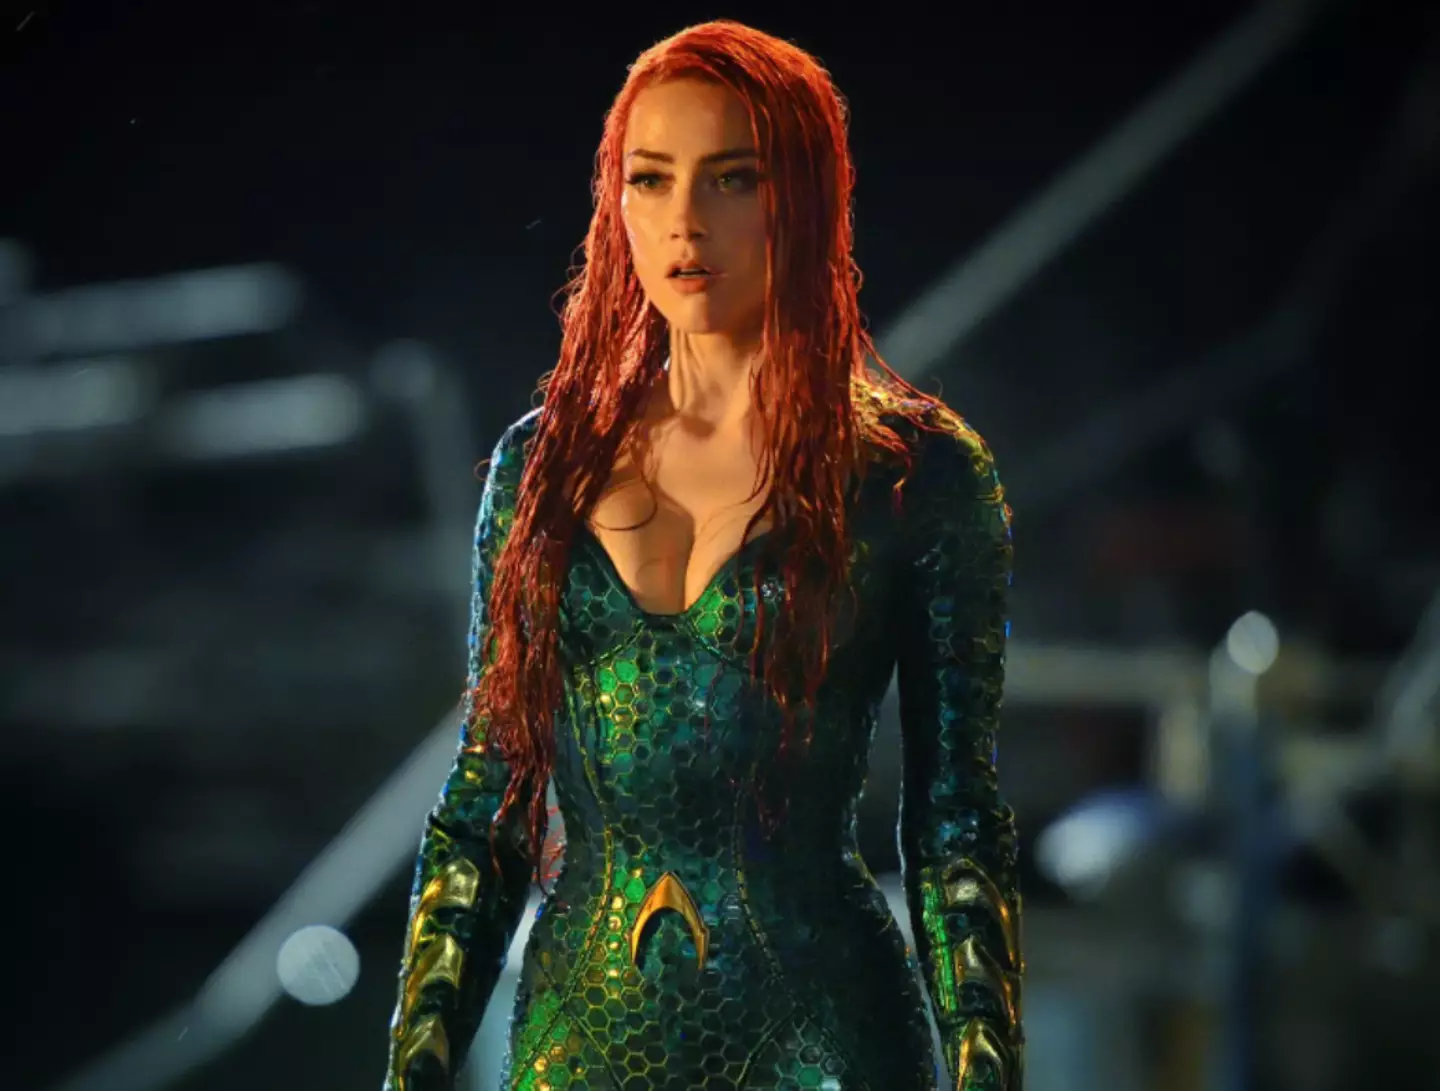 Amber in Aquaman playing Mera.